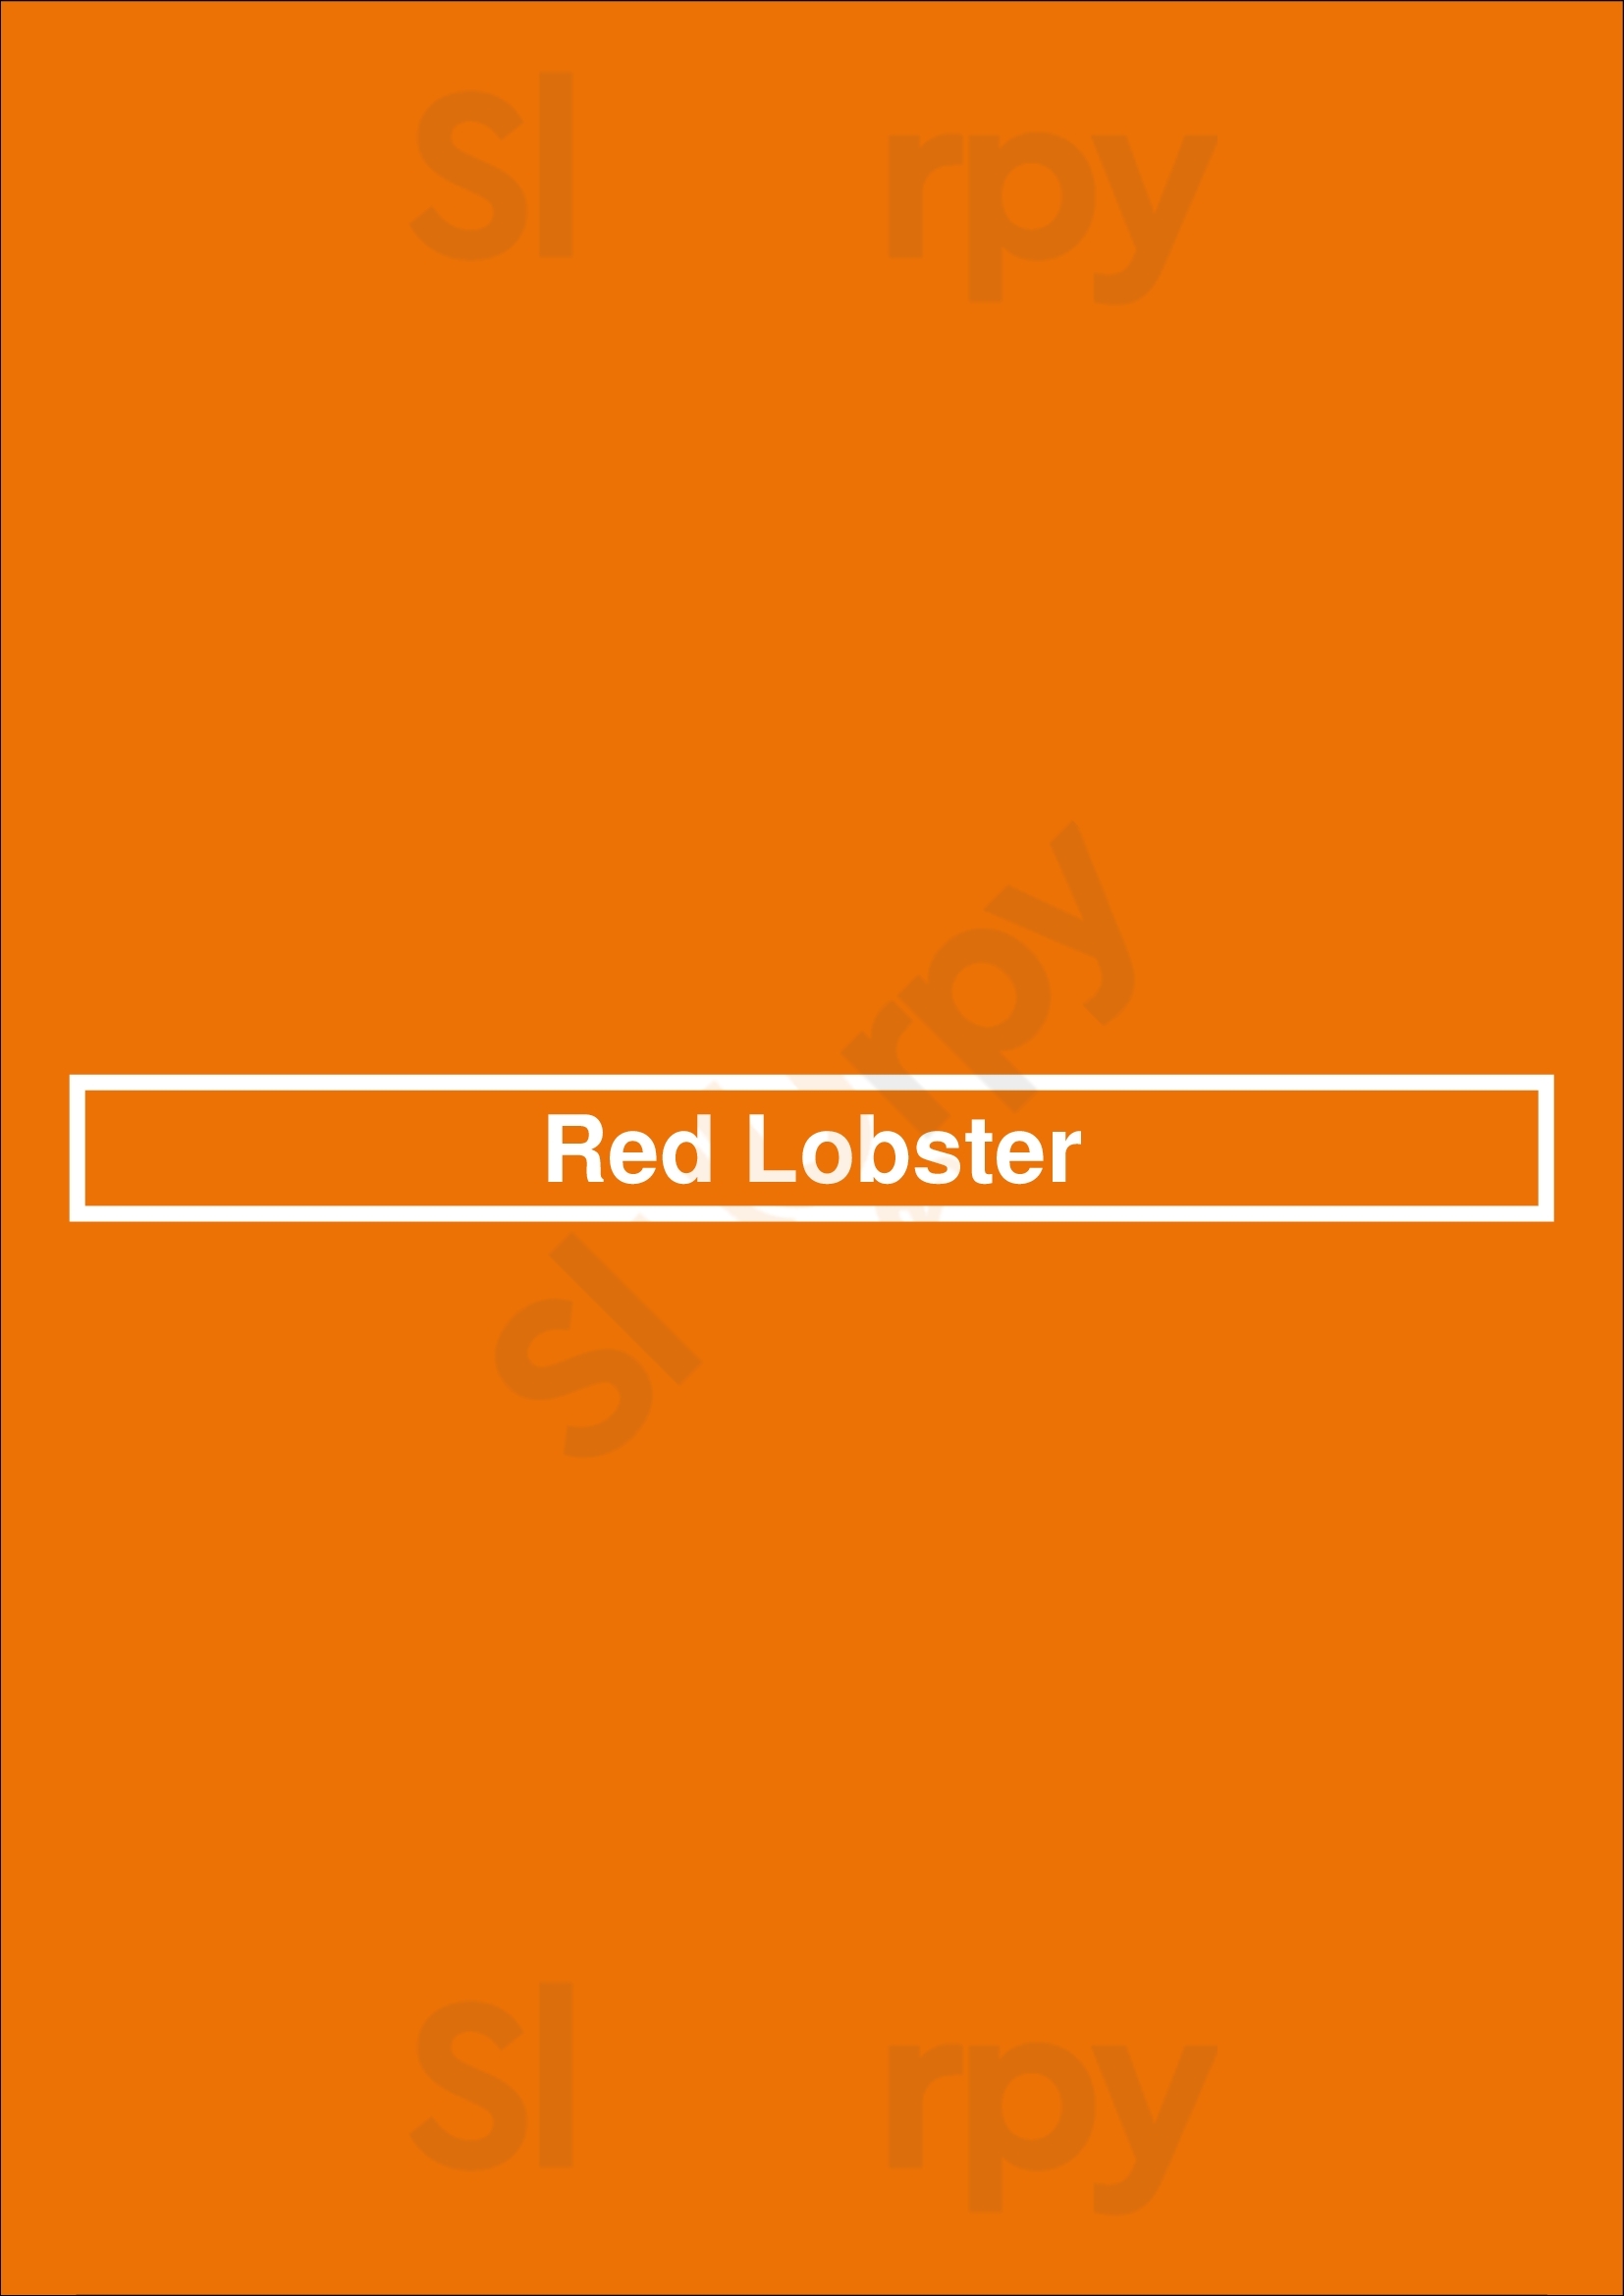 Red Lobster Lexington Menu - 1